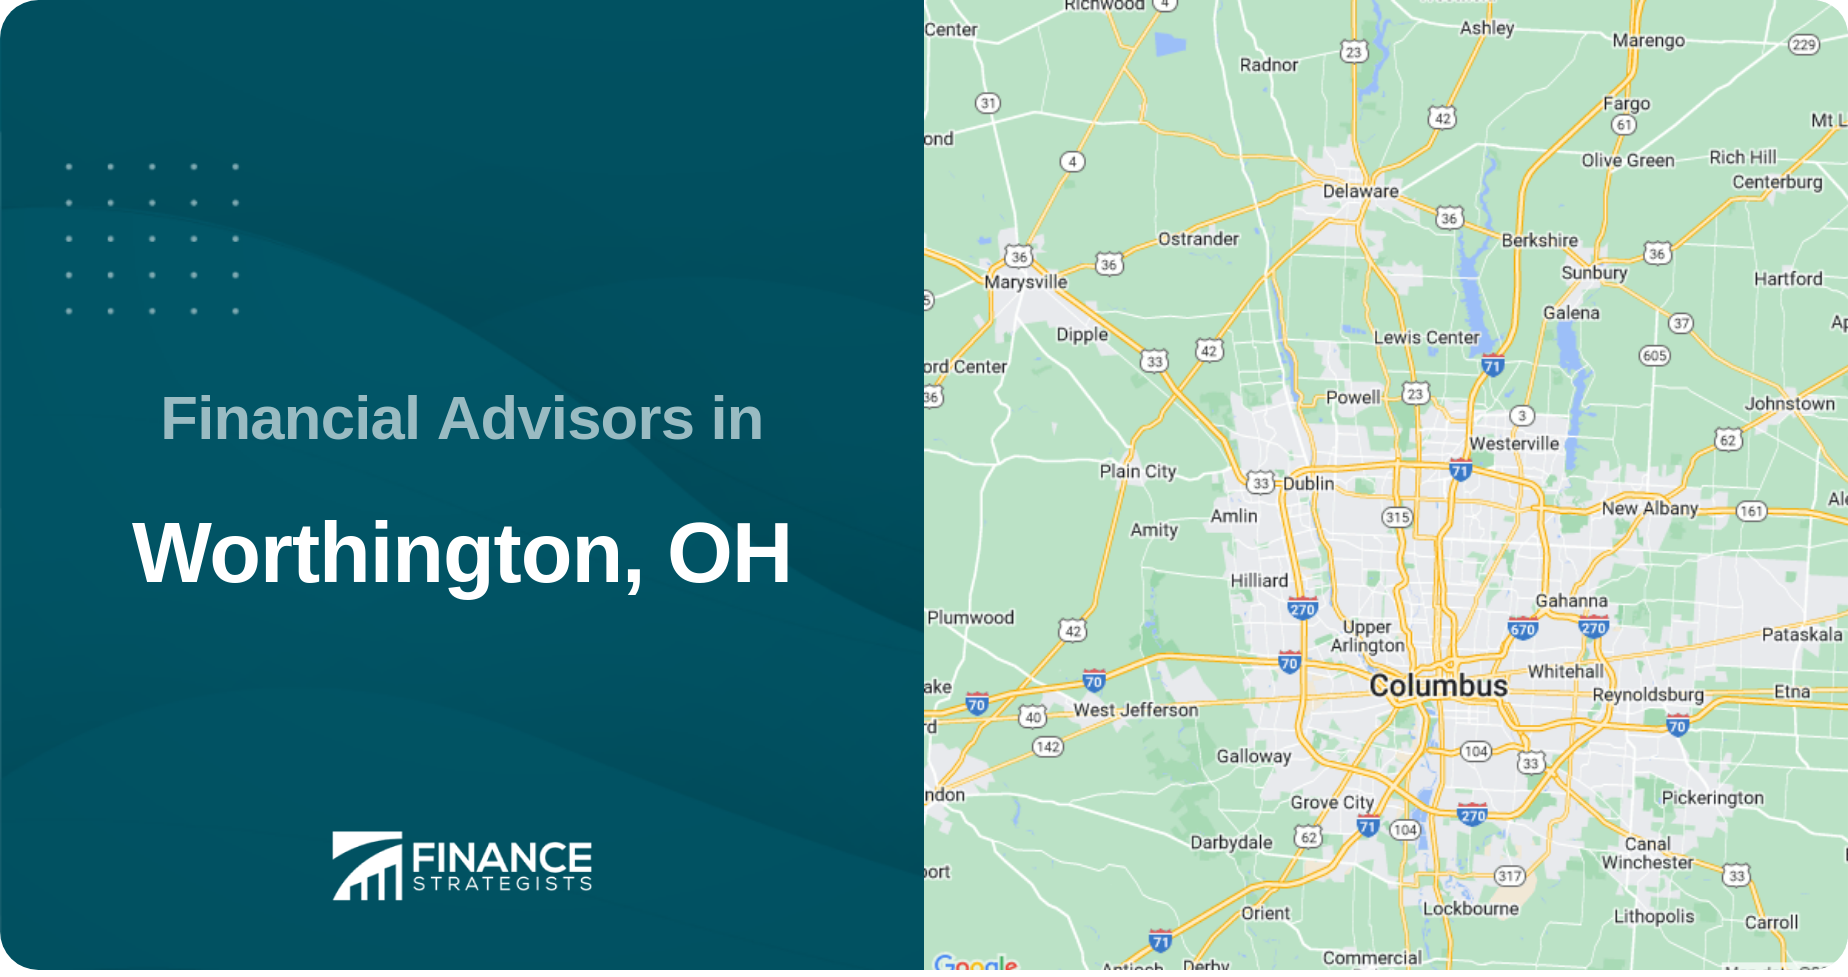 Financial Advisors in Worthington, OH